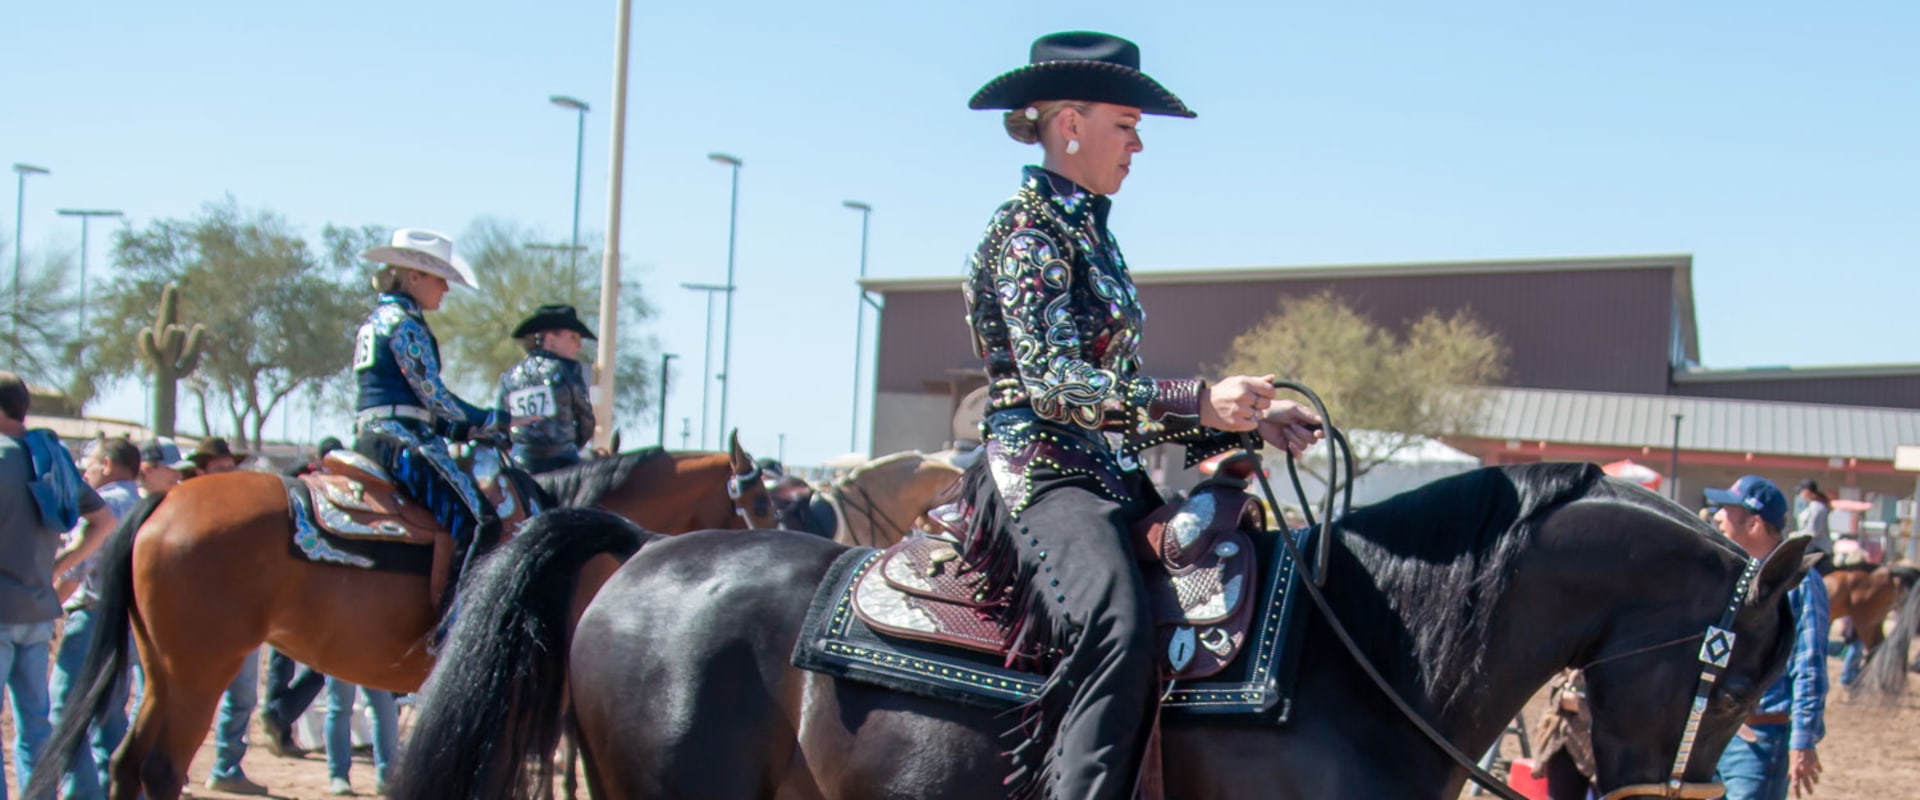 Experience the Majestic Arabian Horse Show in Scottsdale, Arizona